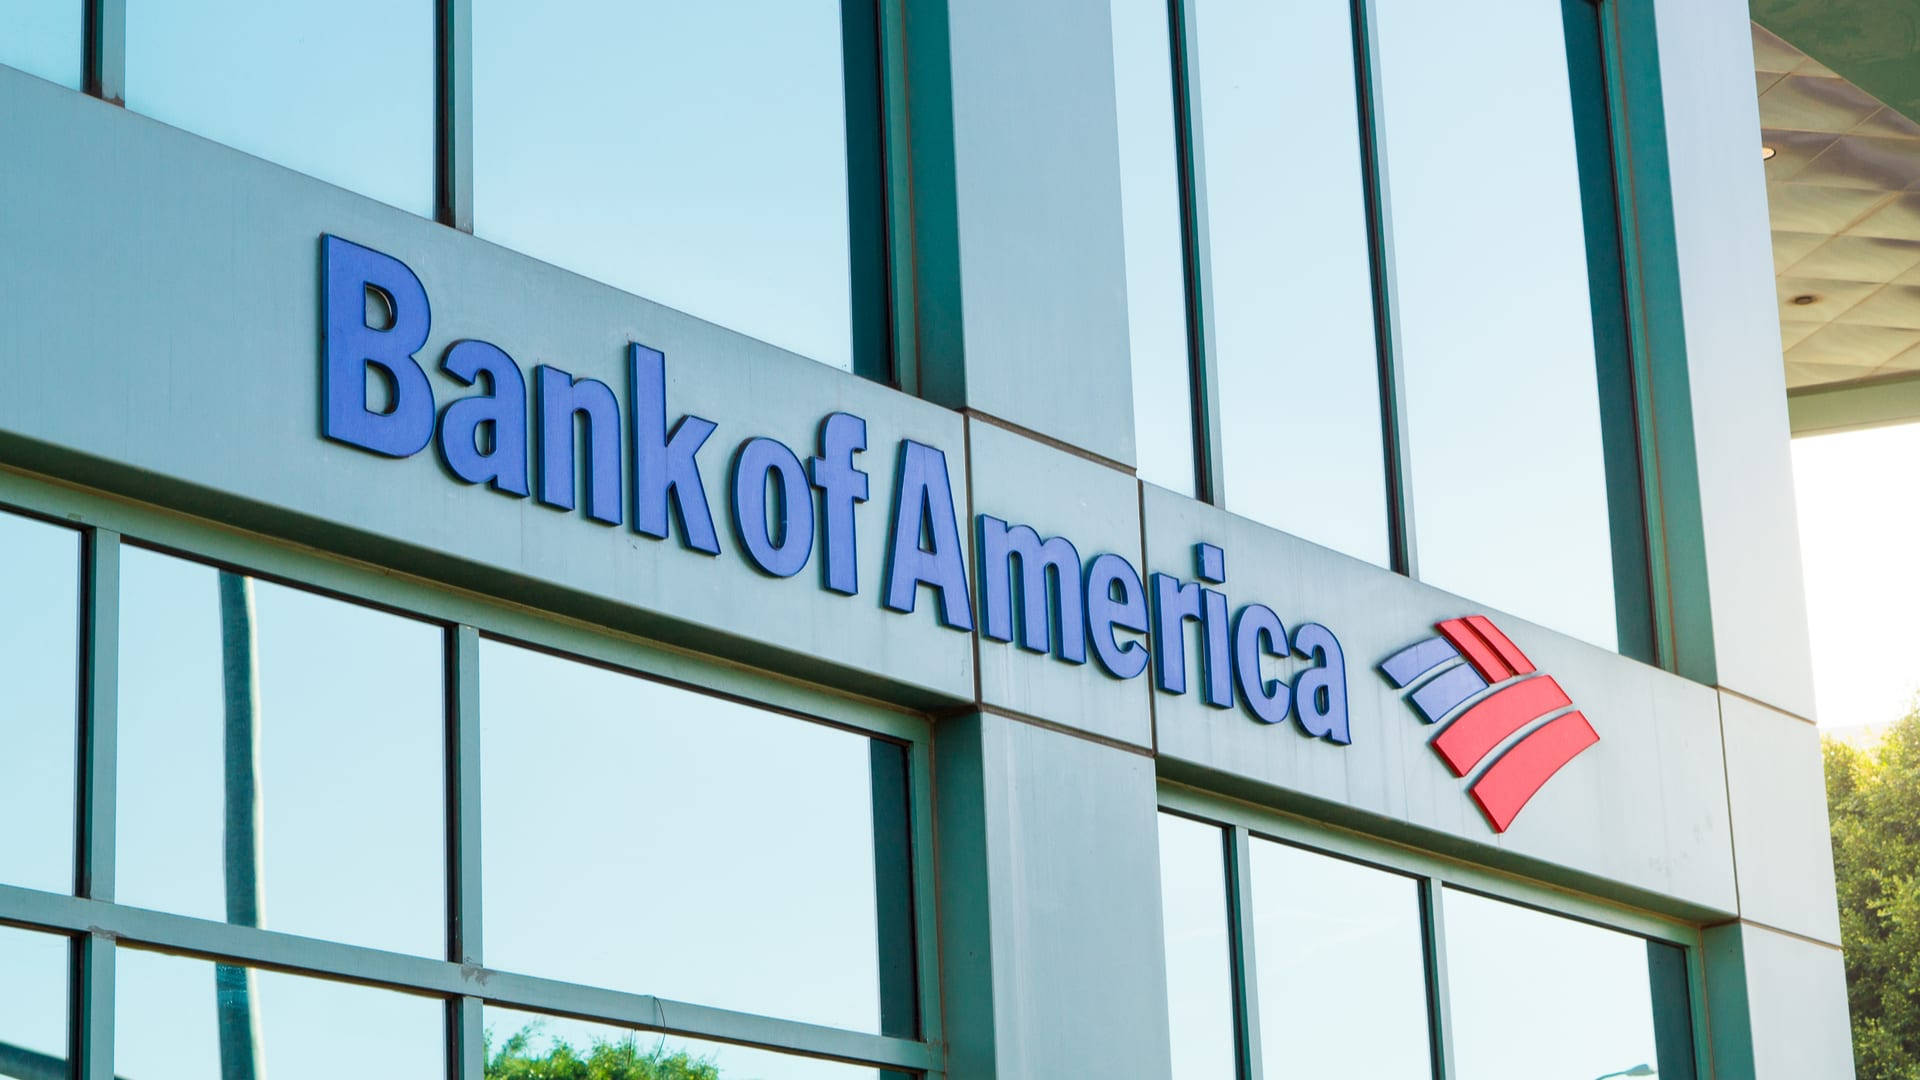 Bright Bank Of America Signage Background